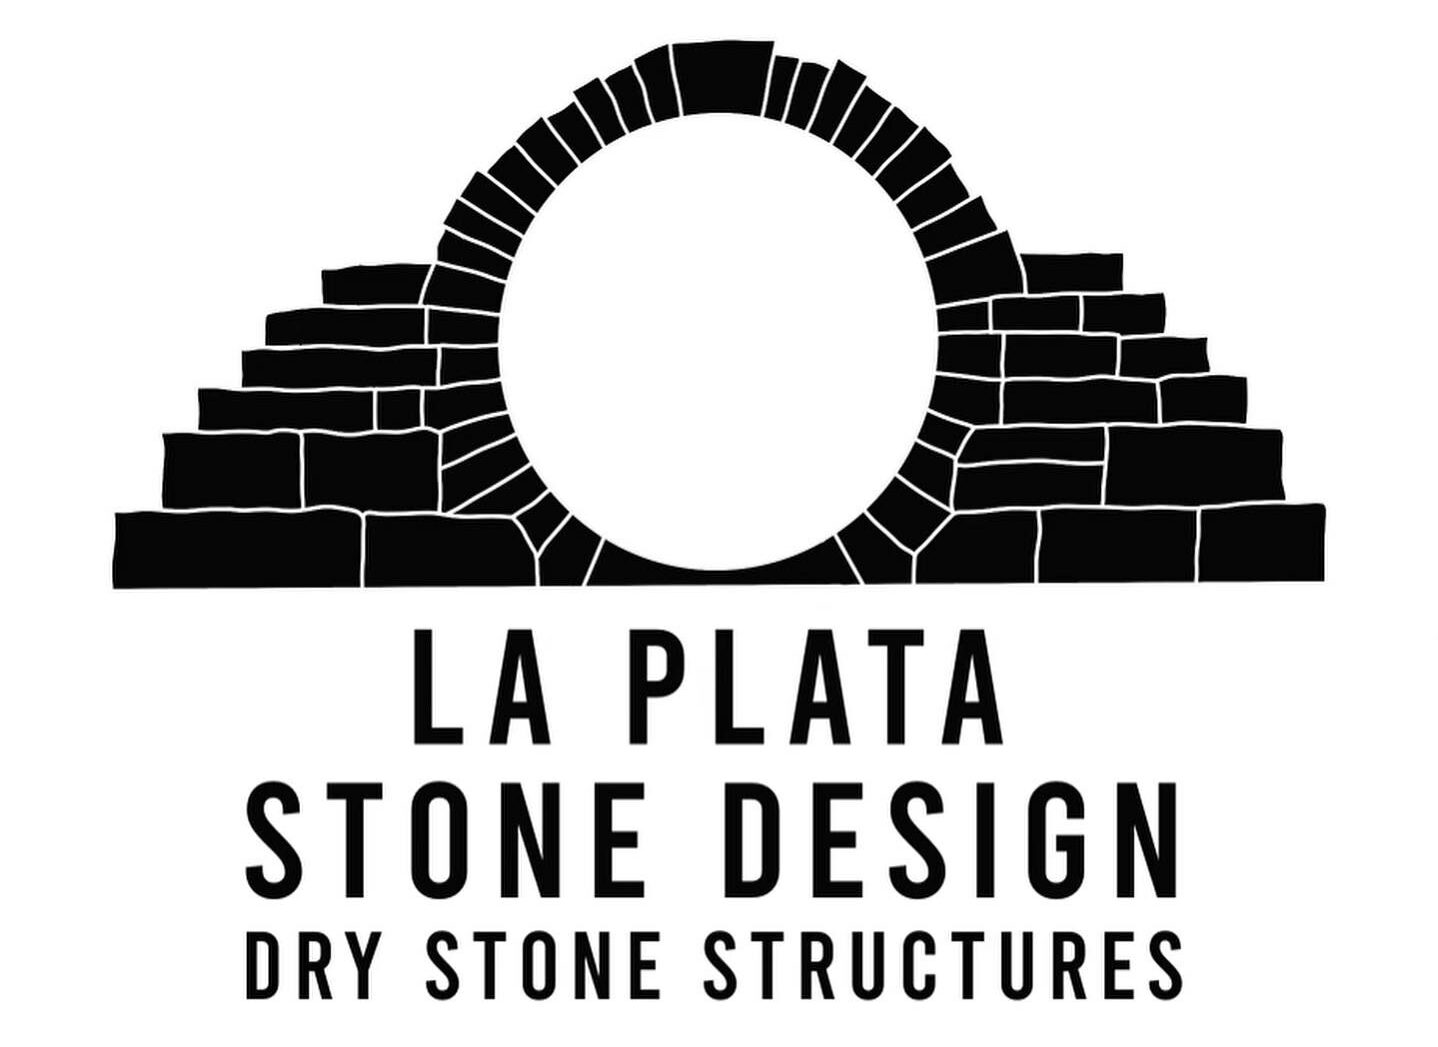 La Plata Stone Design LLC business logo featuring dry stone moon gate